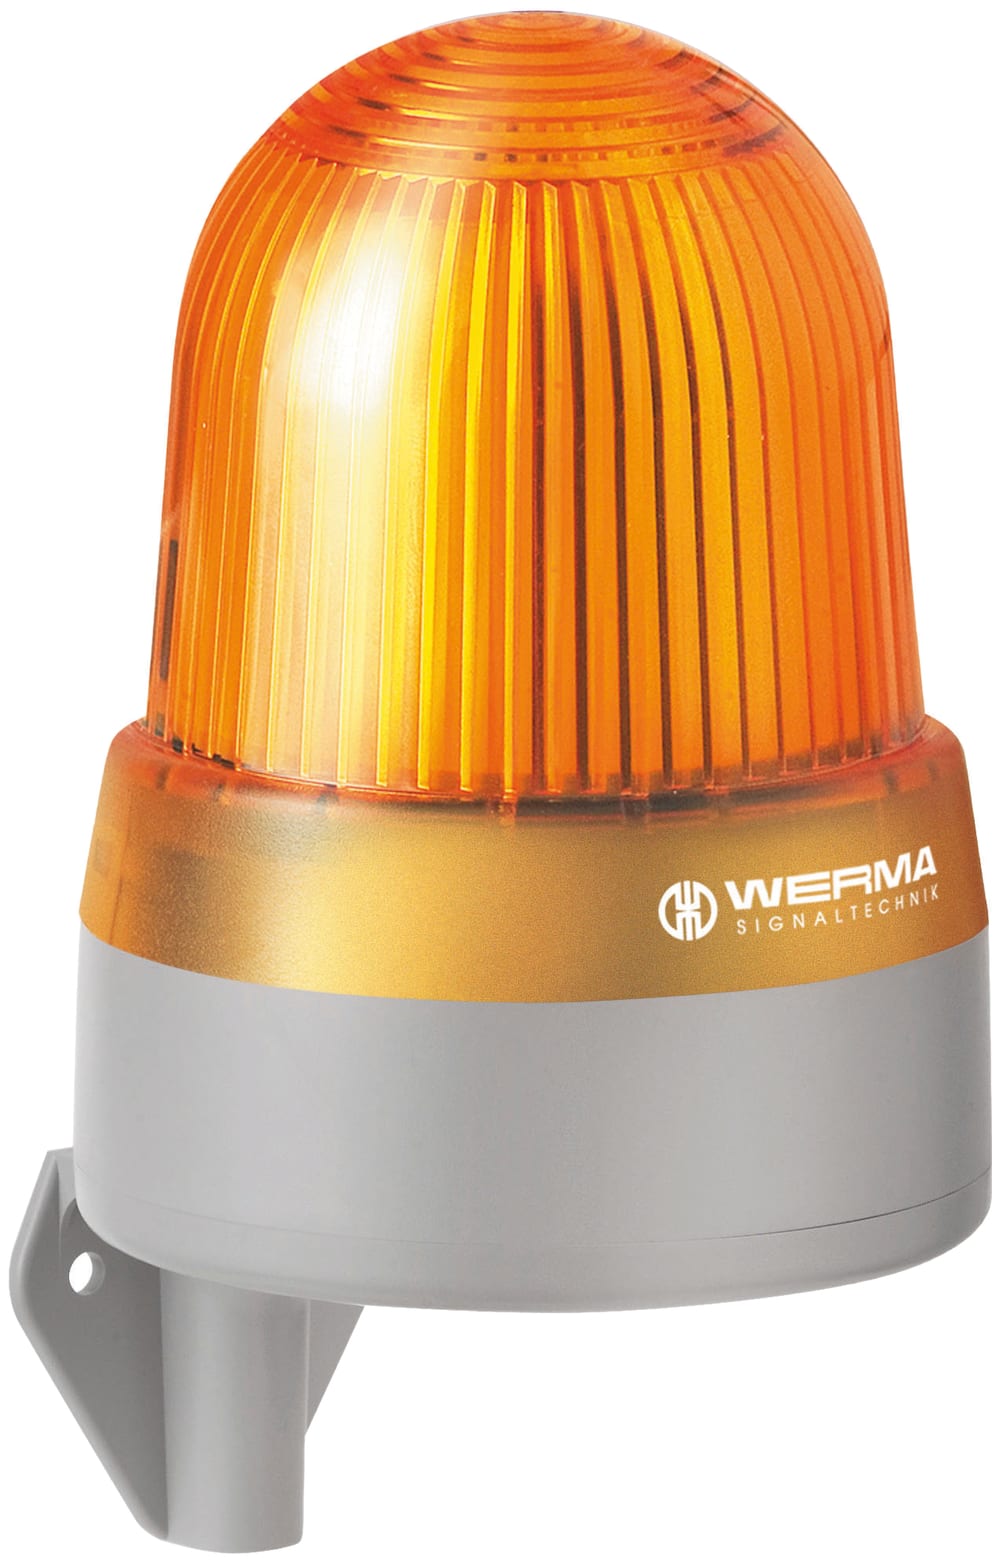 WERMA - Combine Fixe-Flash-EVS 108dB - Serie 433 - 115-230VAC - Orange - Mural